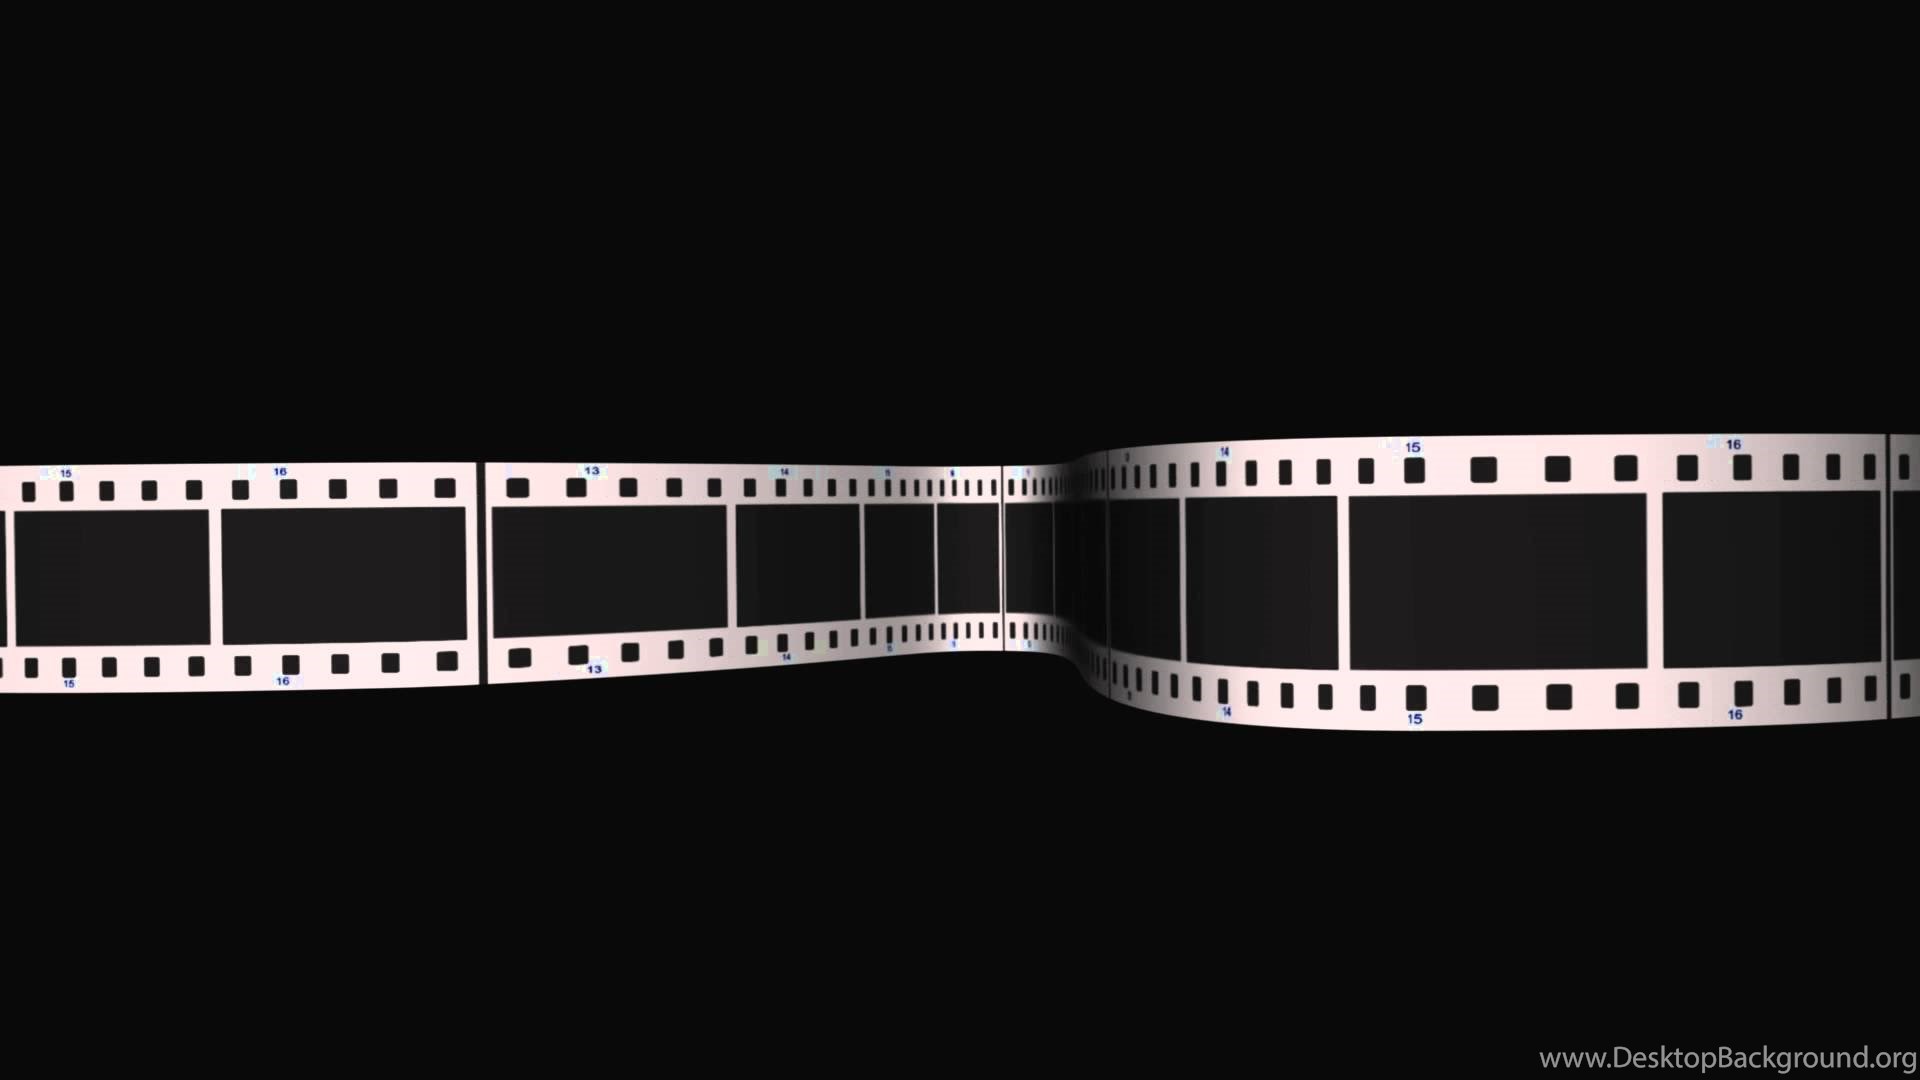 Free Stock Video Download 35mm Film Reel Background Animated. Desktop Background